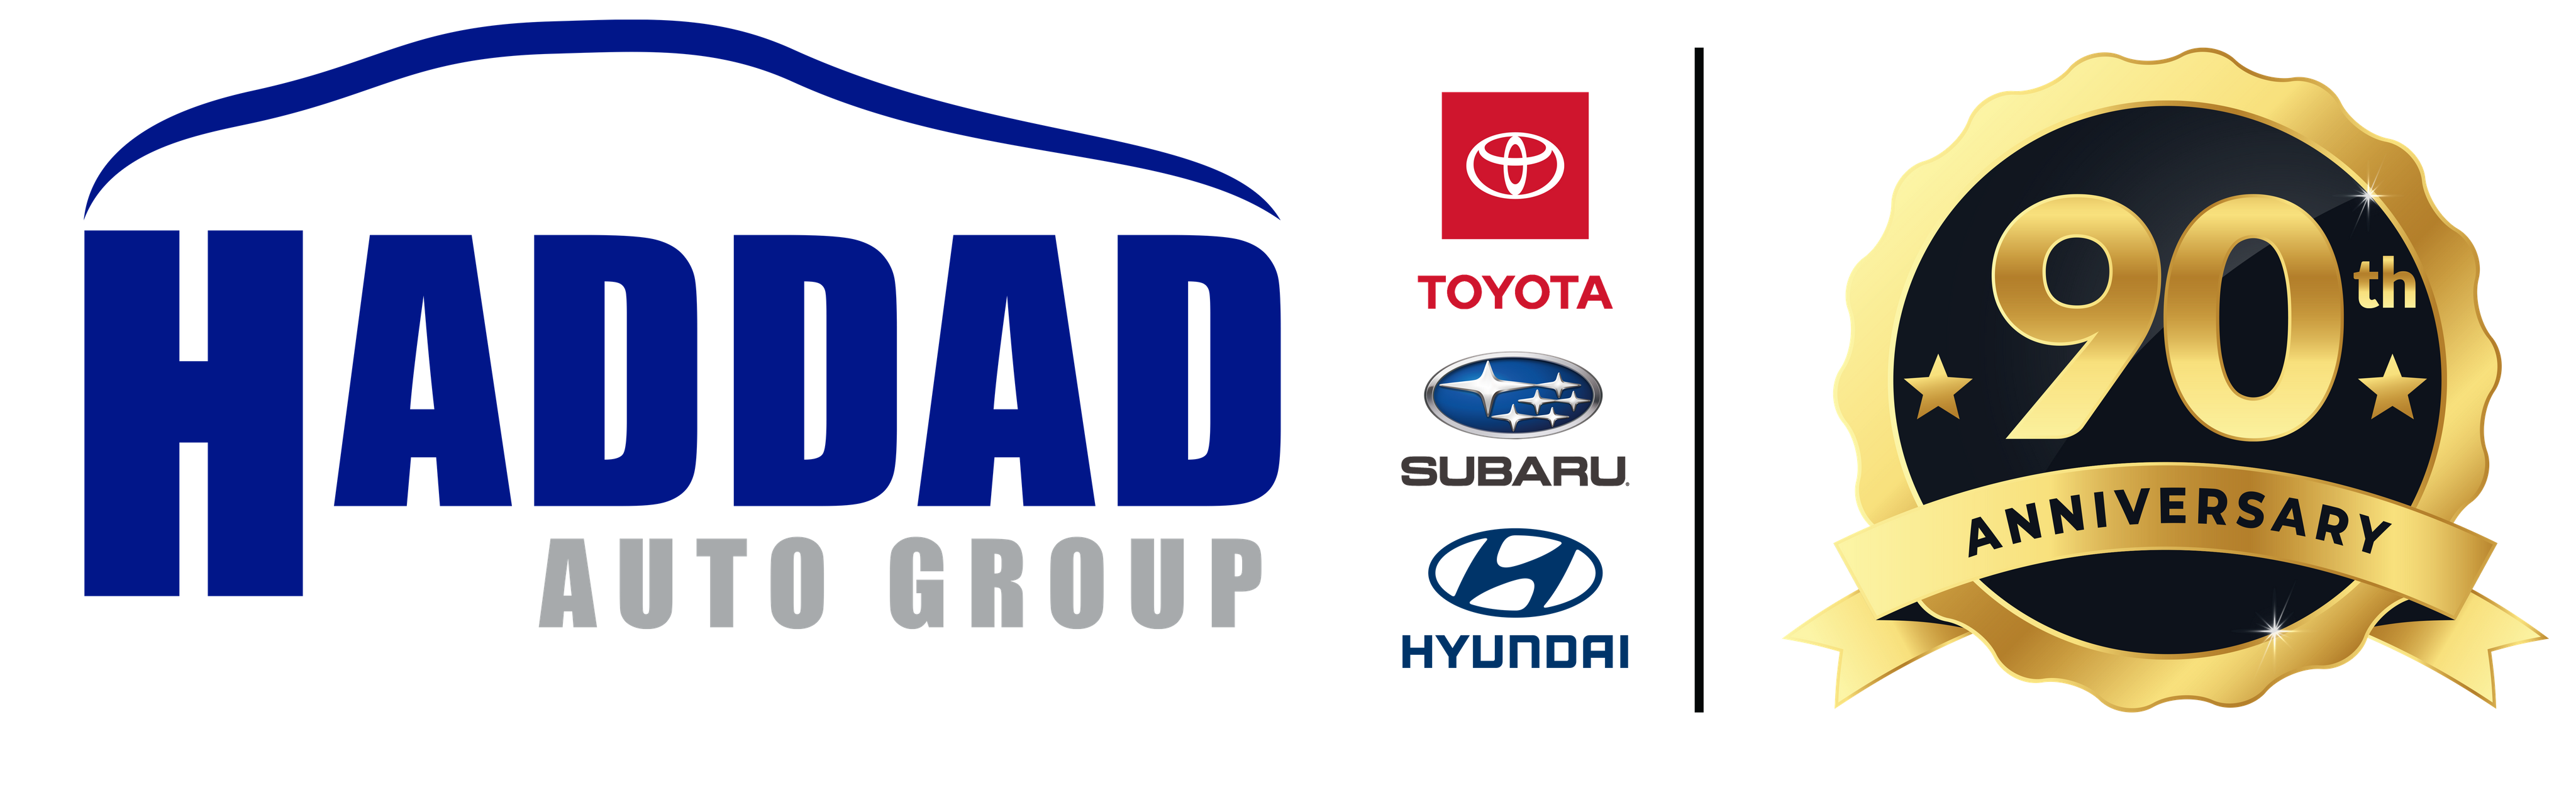 Haddad Auto Group  